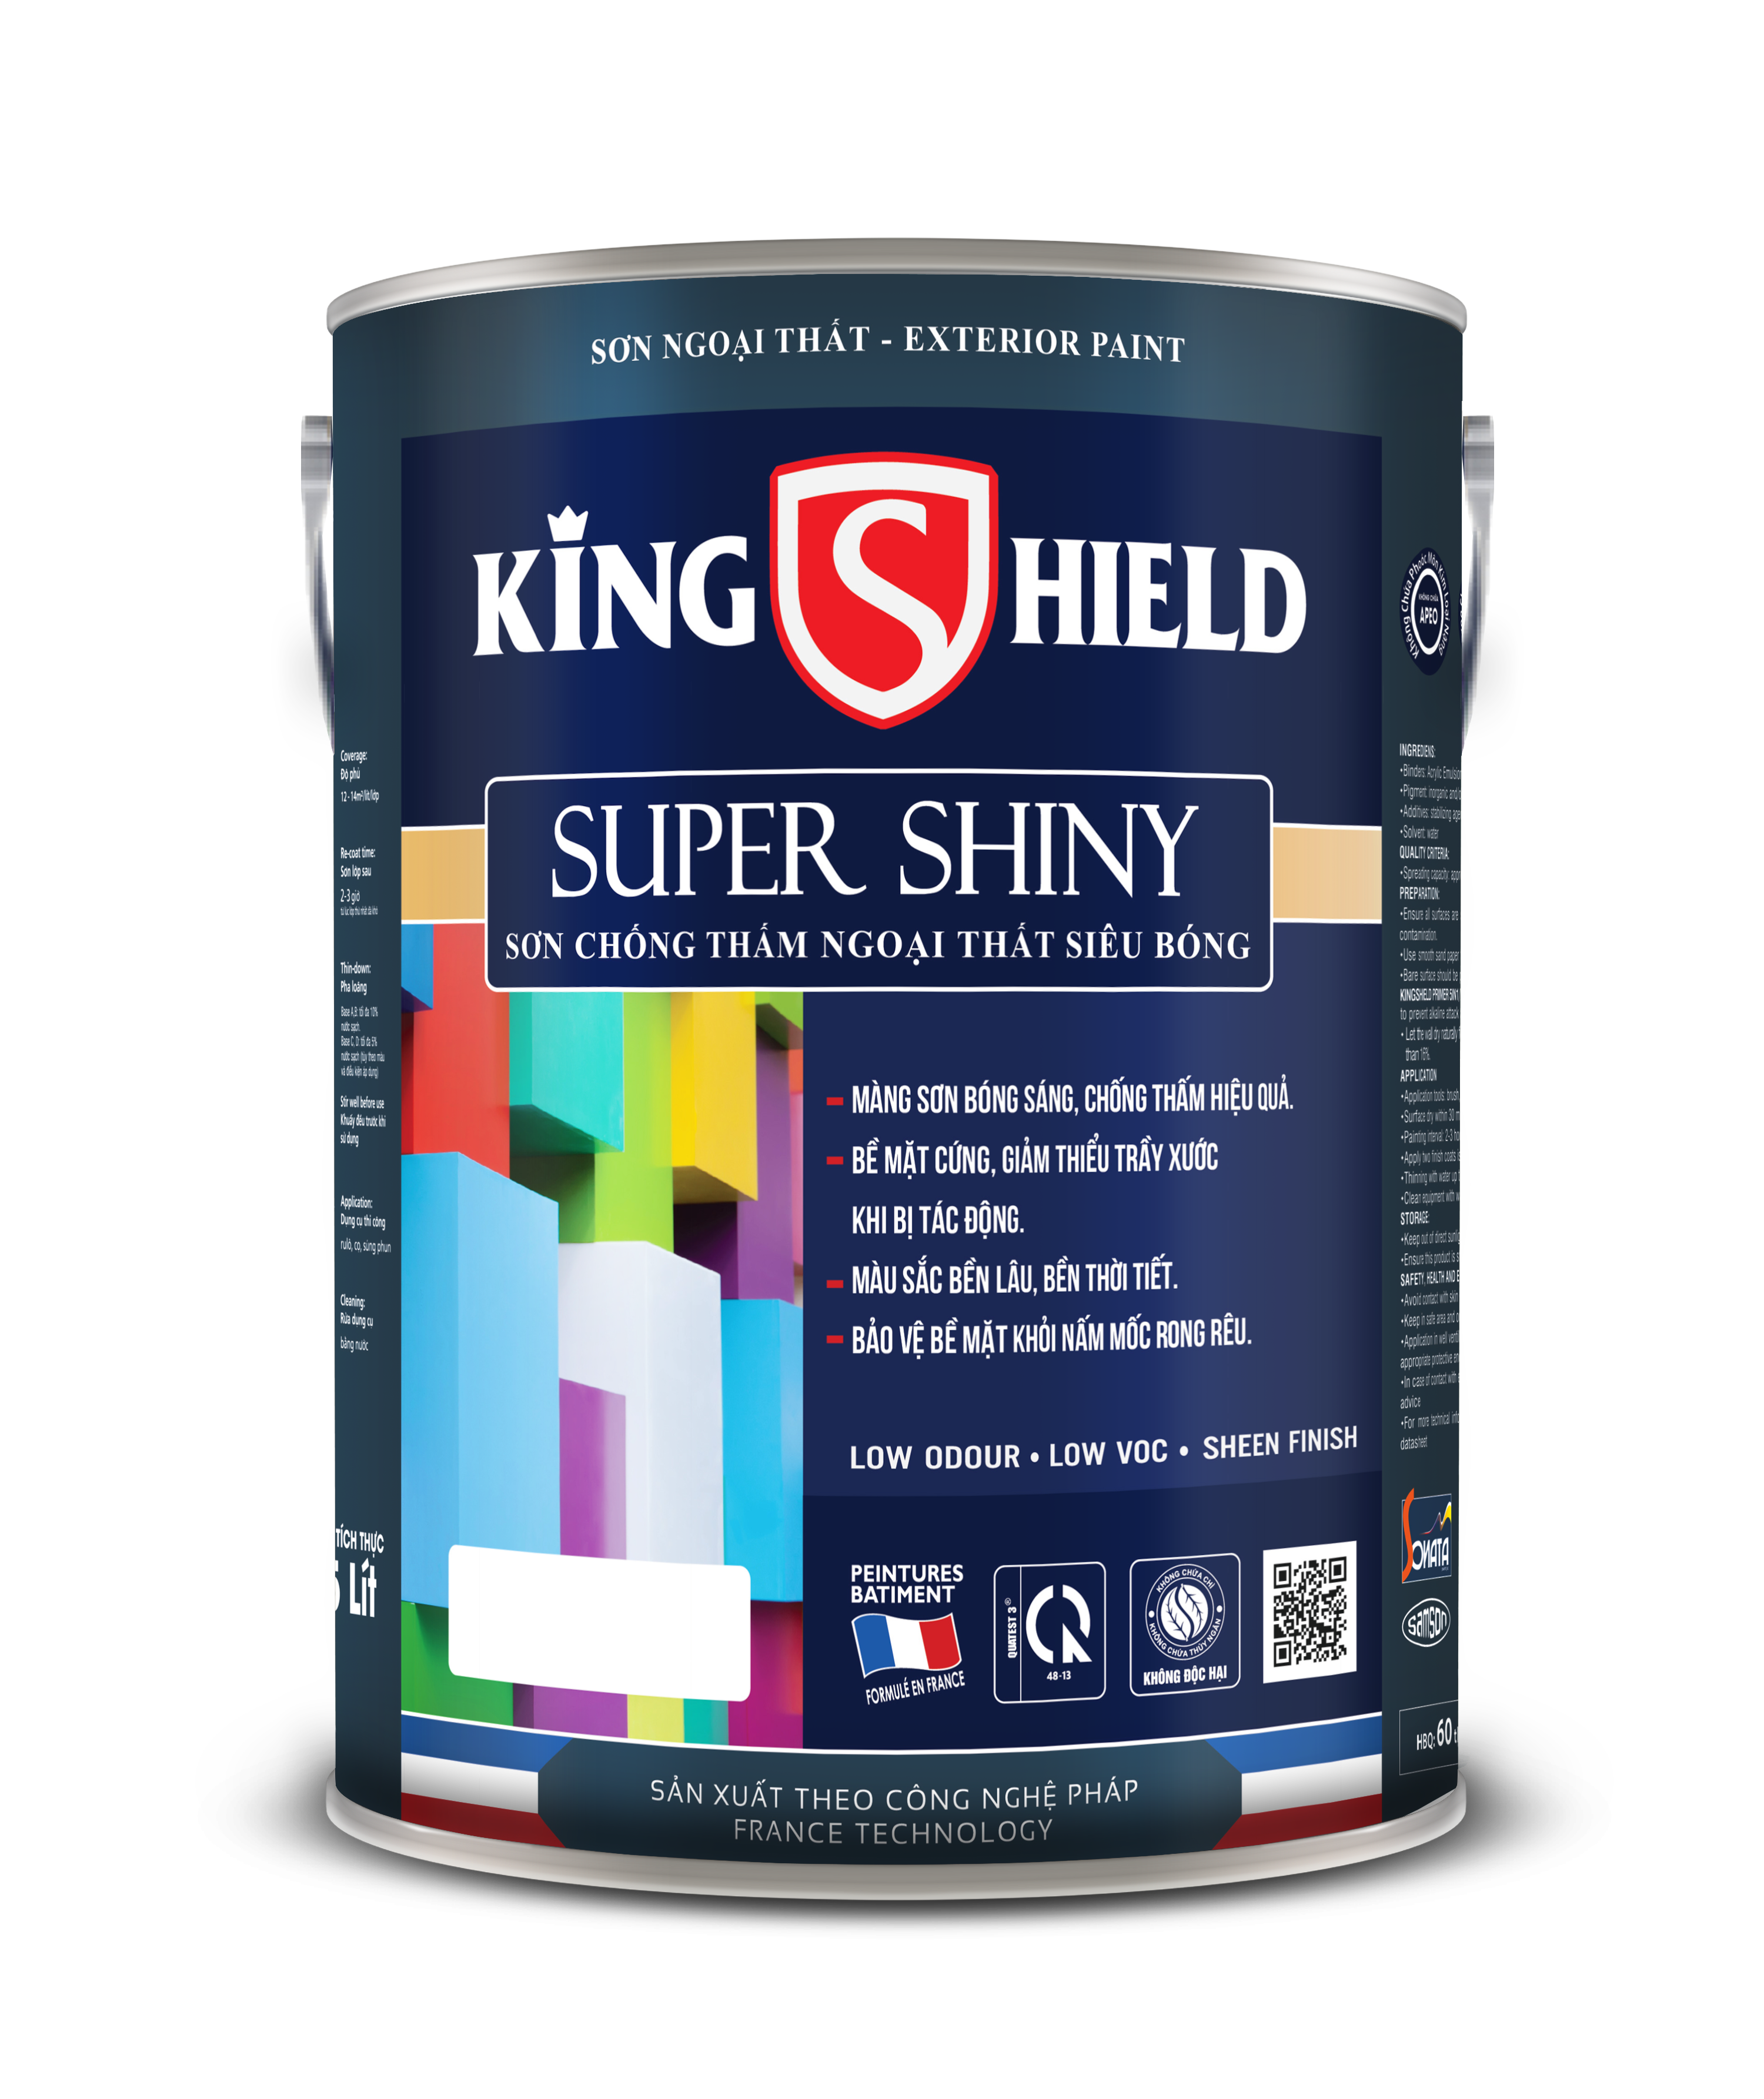 KINGSHIELD SUPER SHINY EXTERIOR